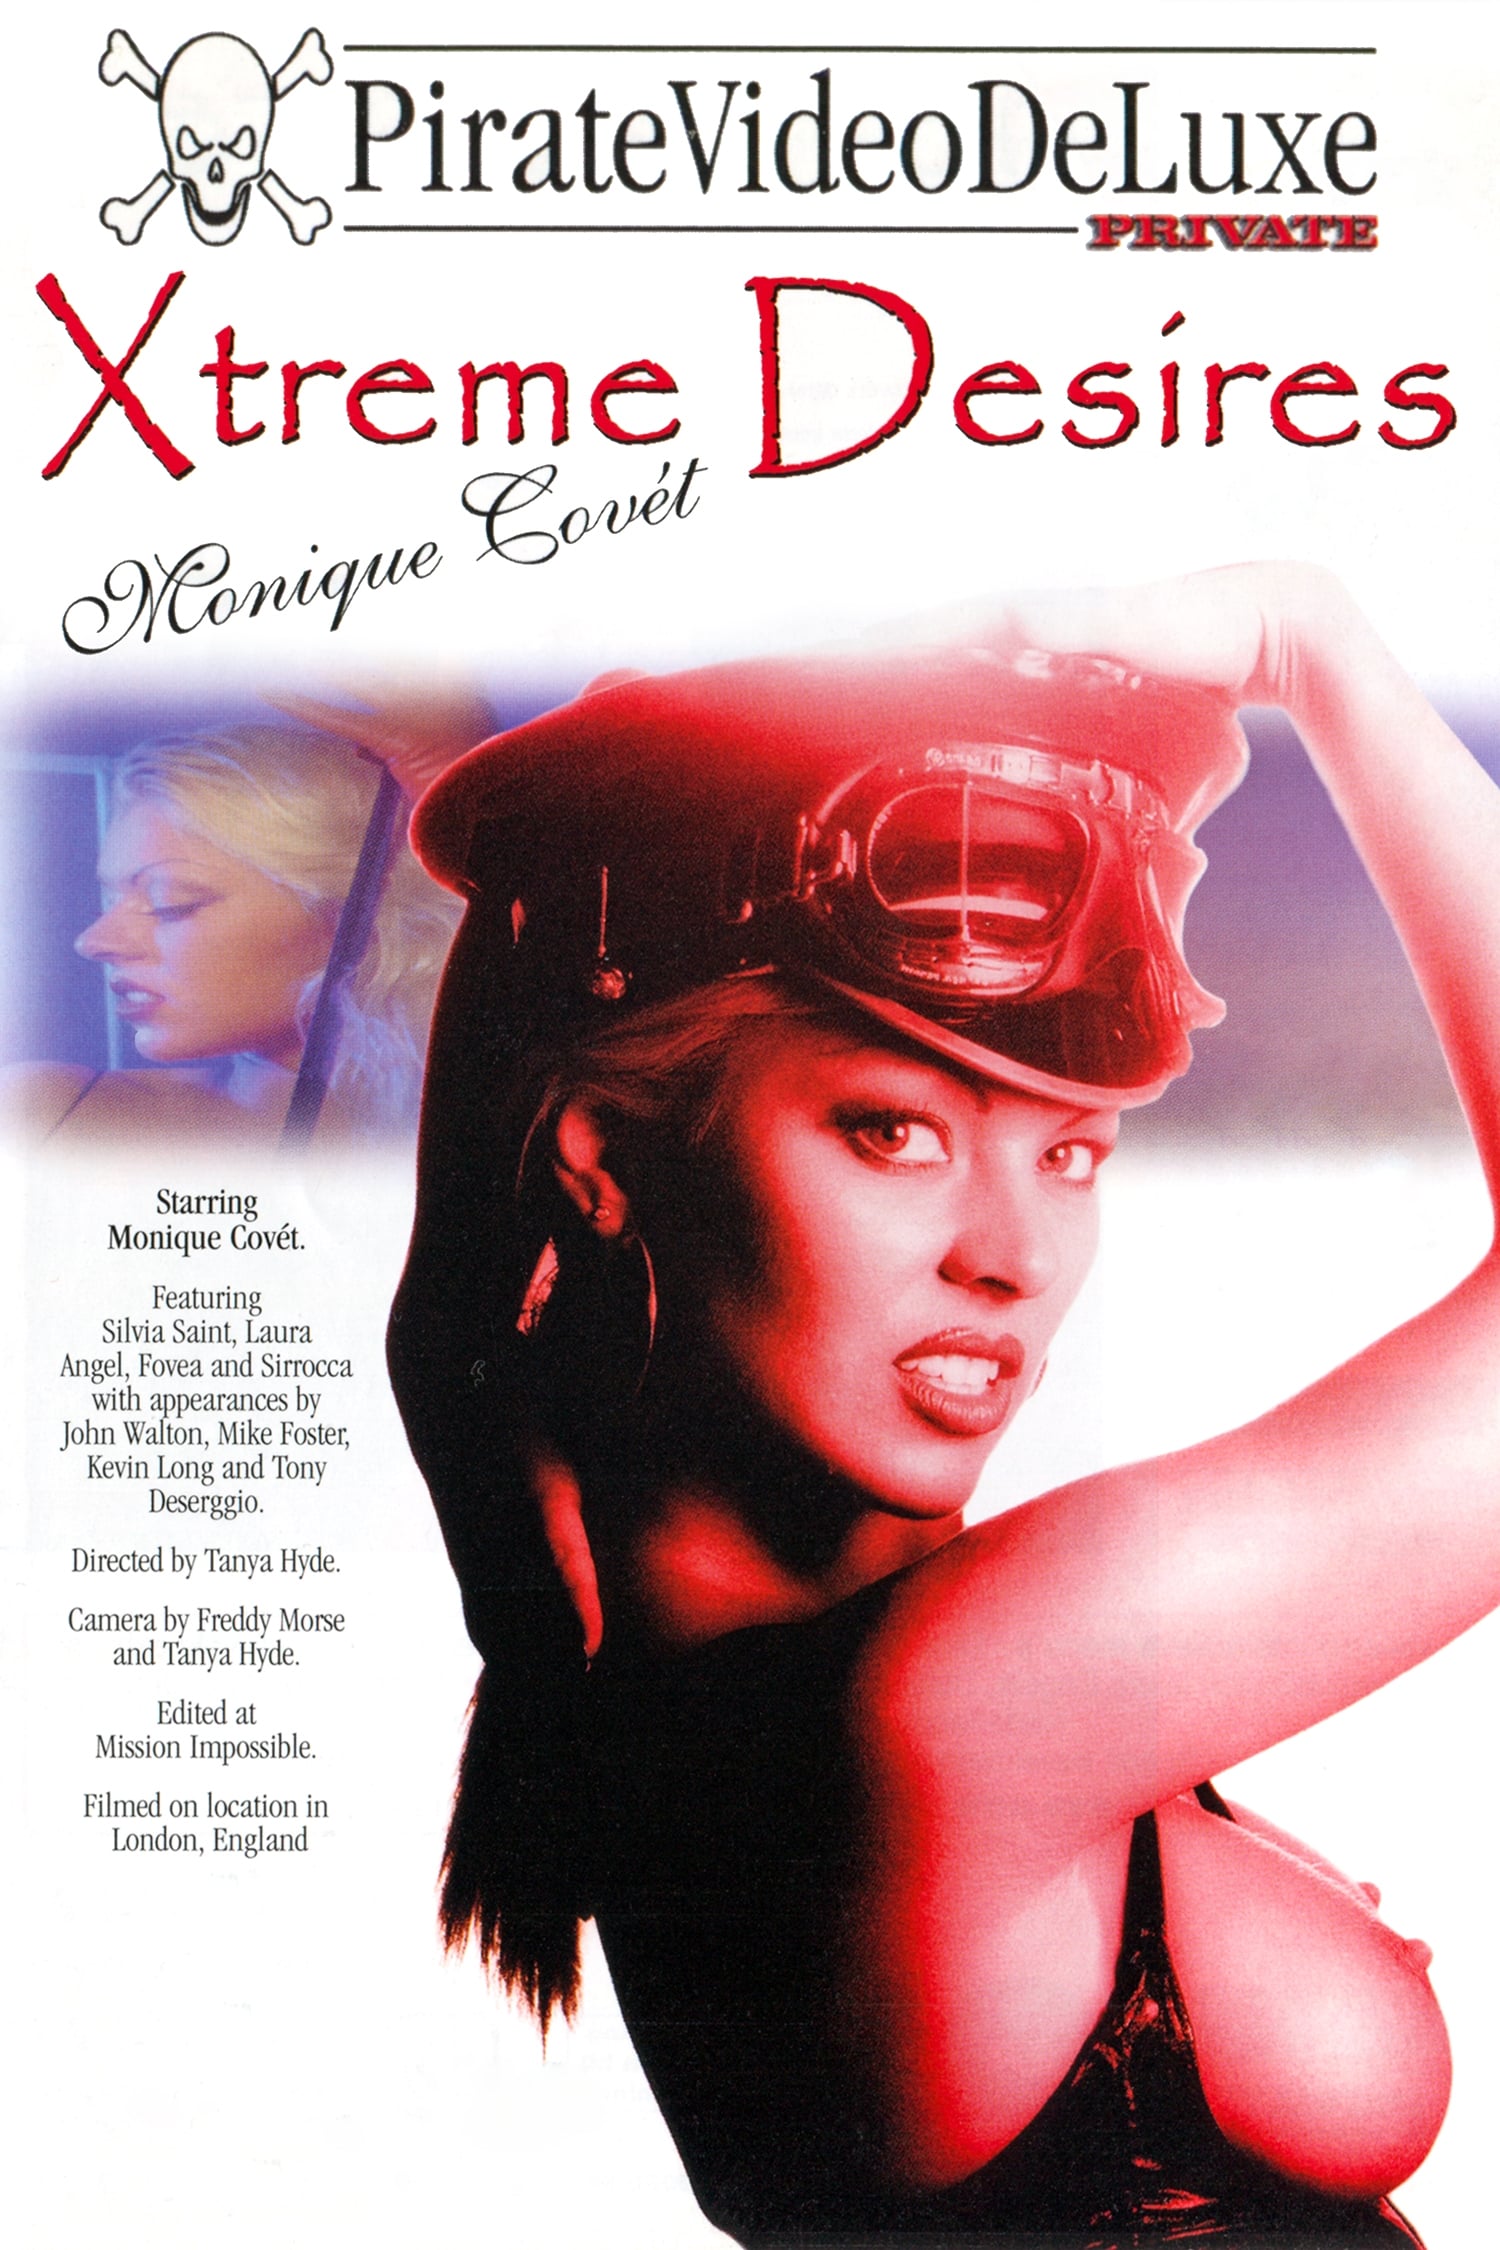 Xtreme desires scene monique covet best adult free compilation